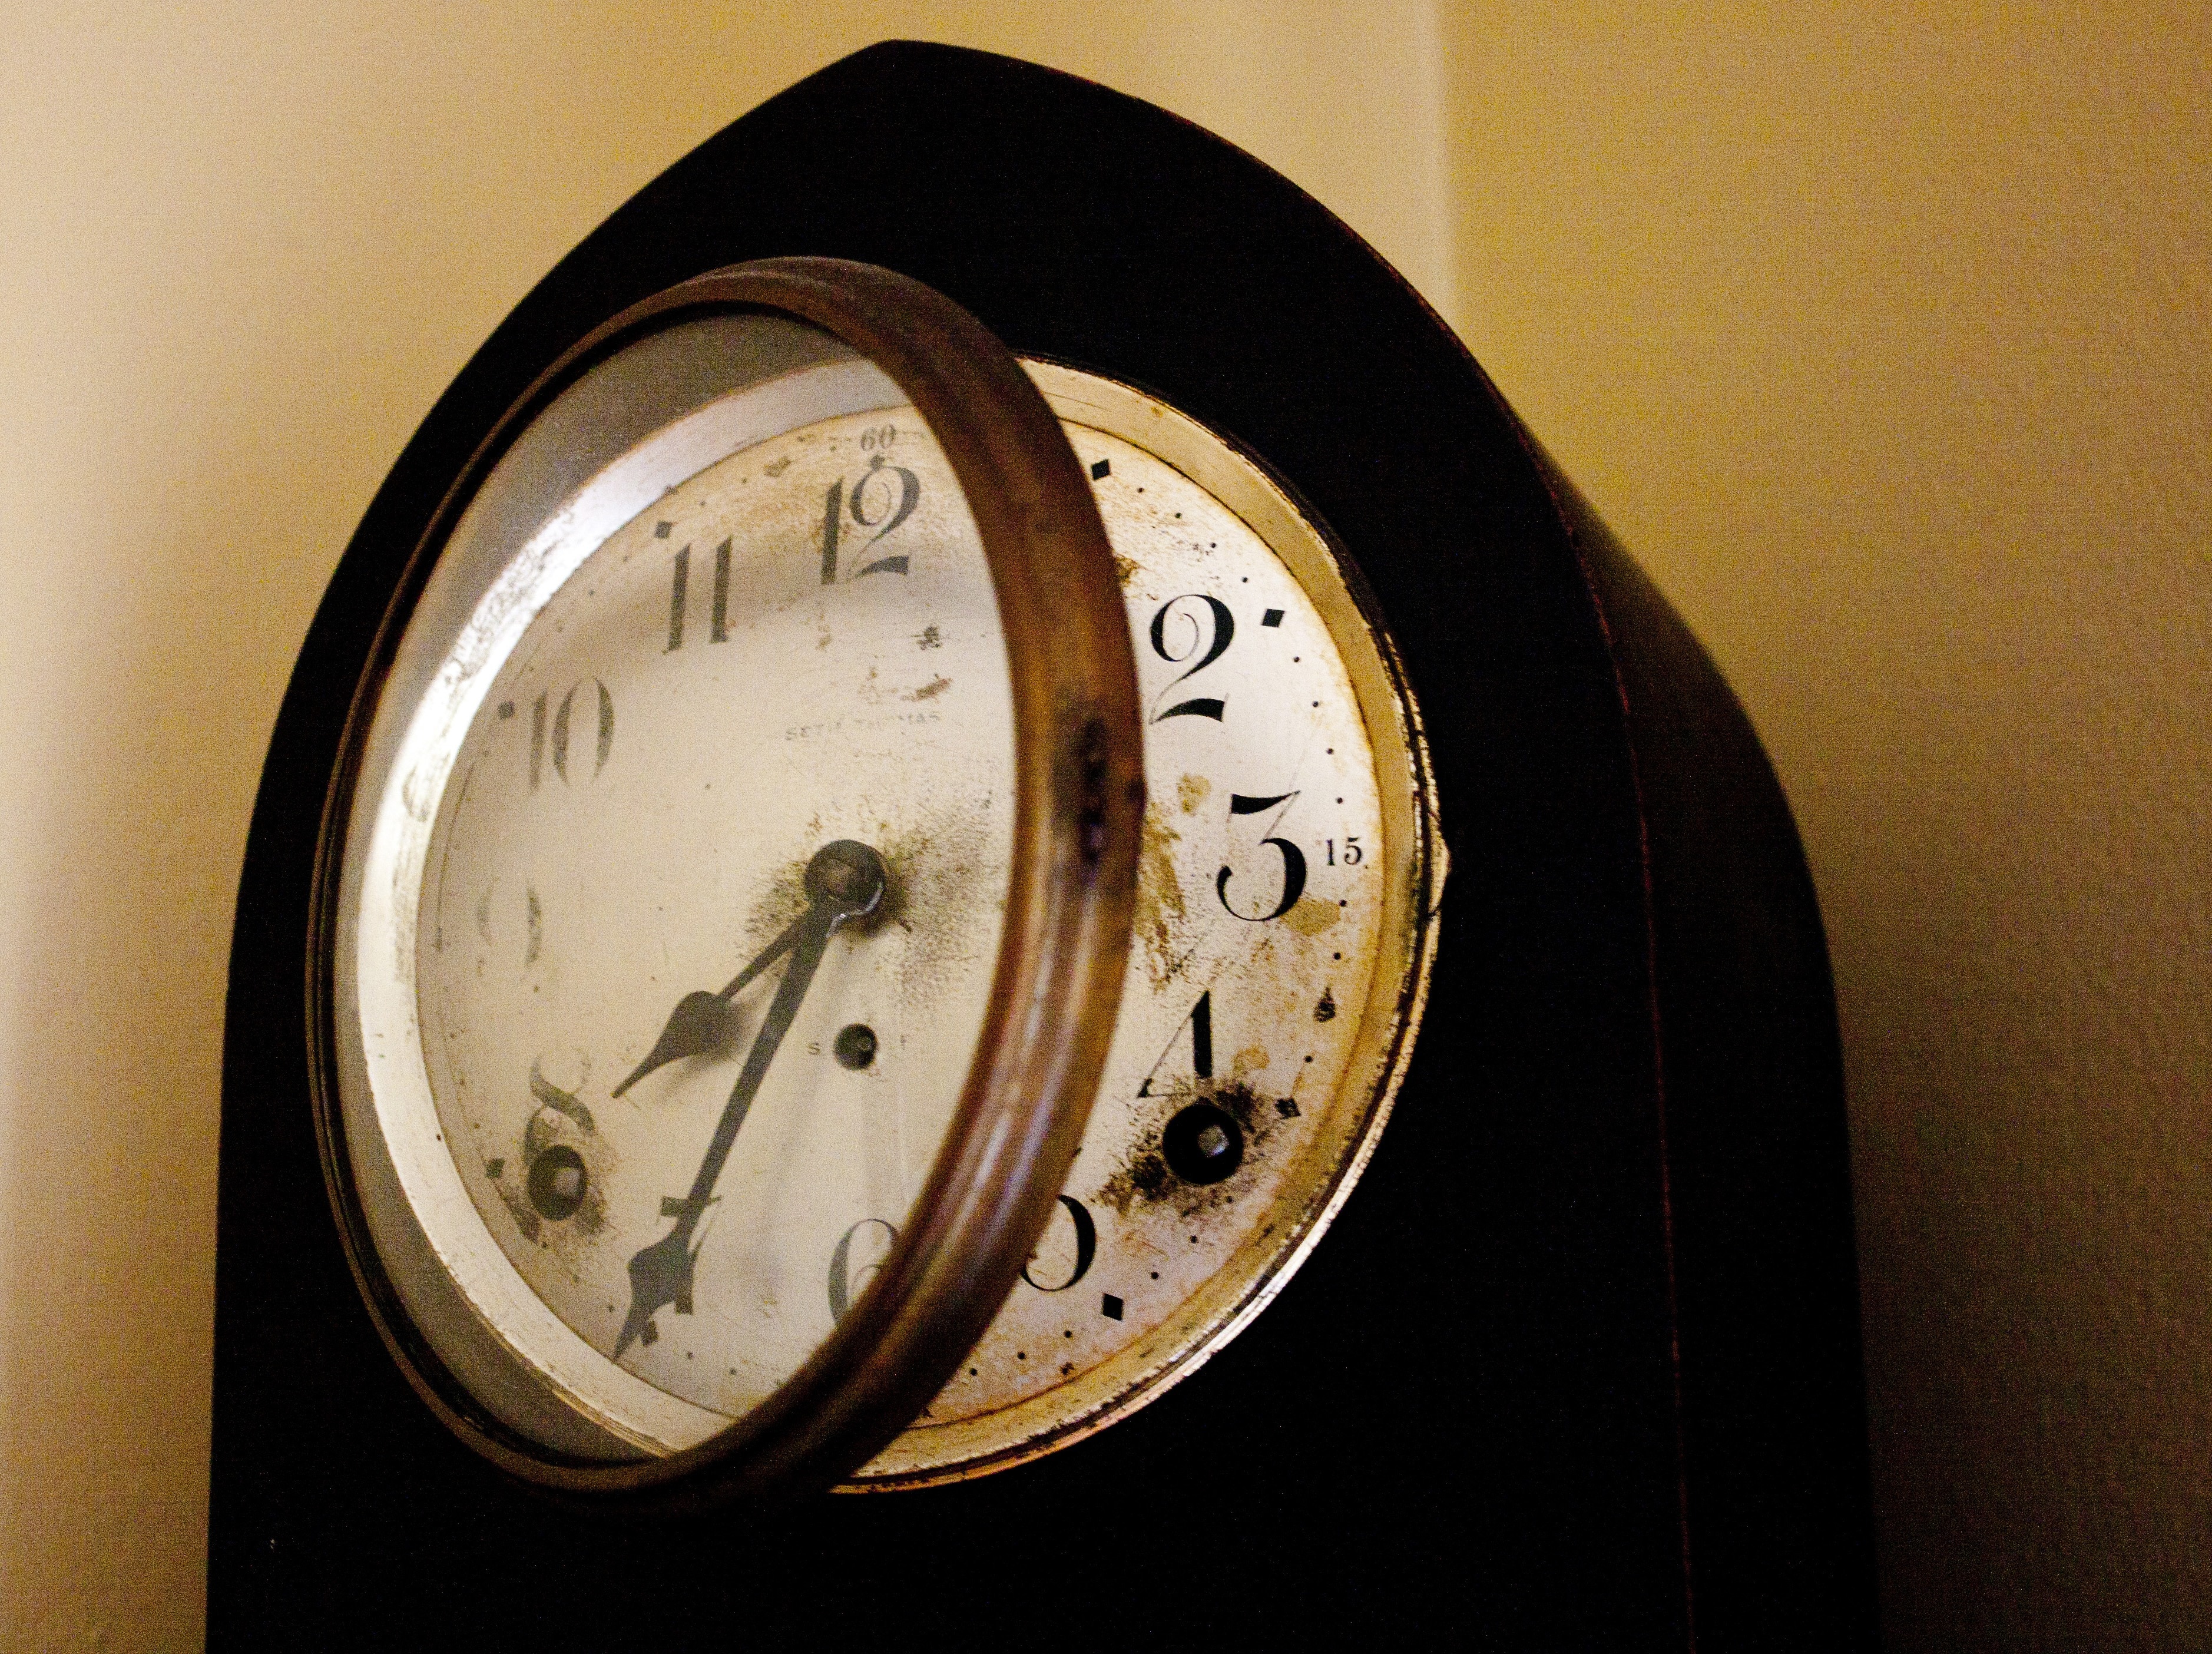 black and white analog clock at 7:35